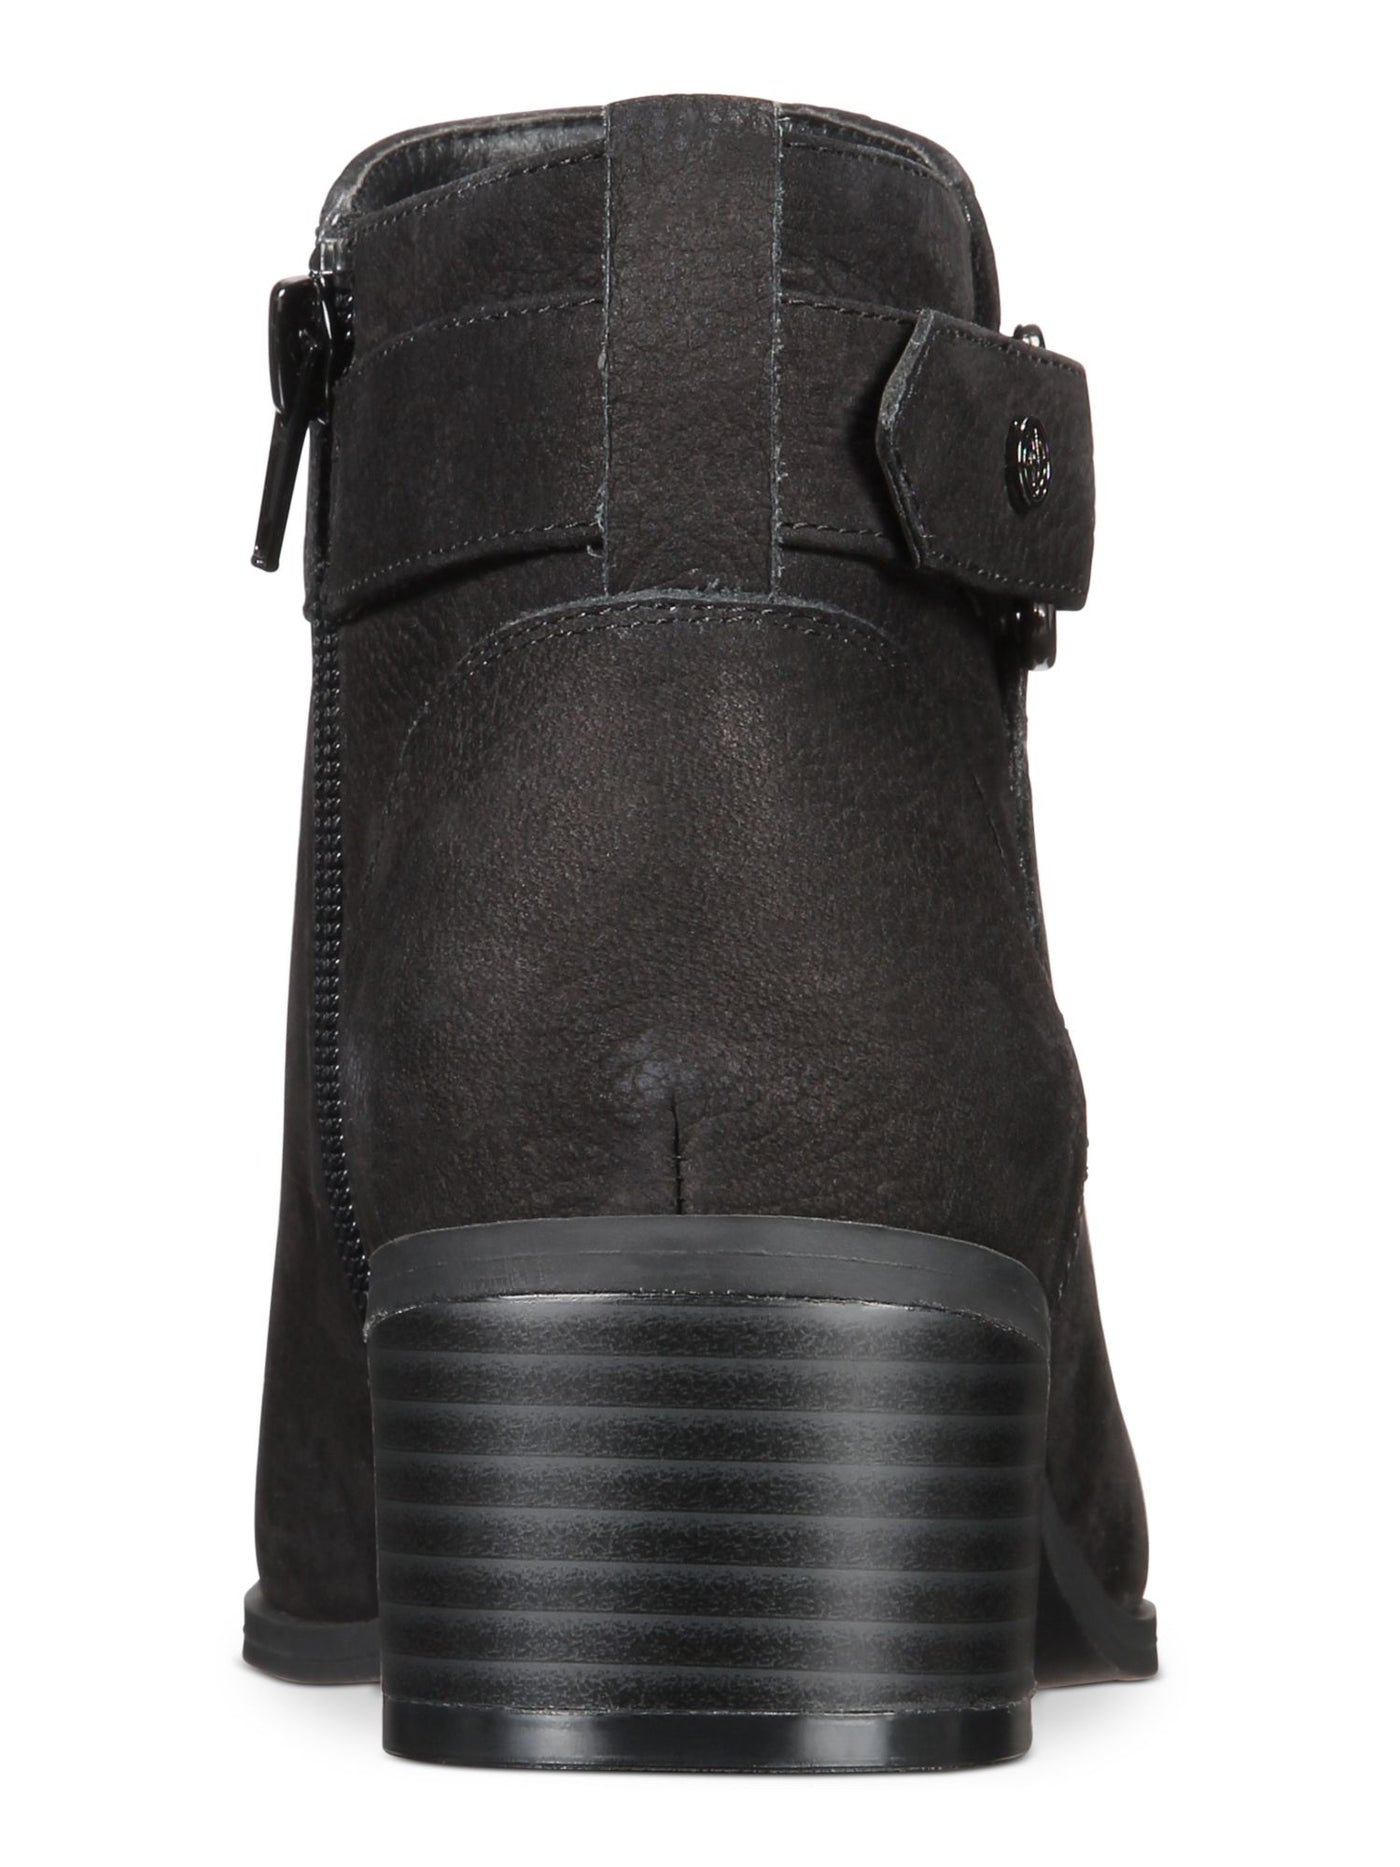 GIANI BERNINI Womens Black Comfort Buckle Accent Putneyy Round Toe Block Heel Zip-Up Leather Booties 6 M